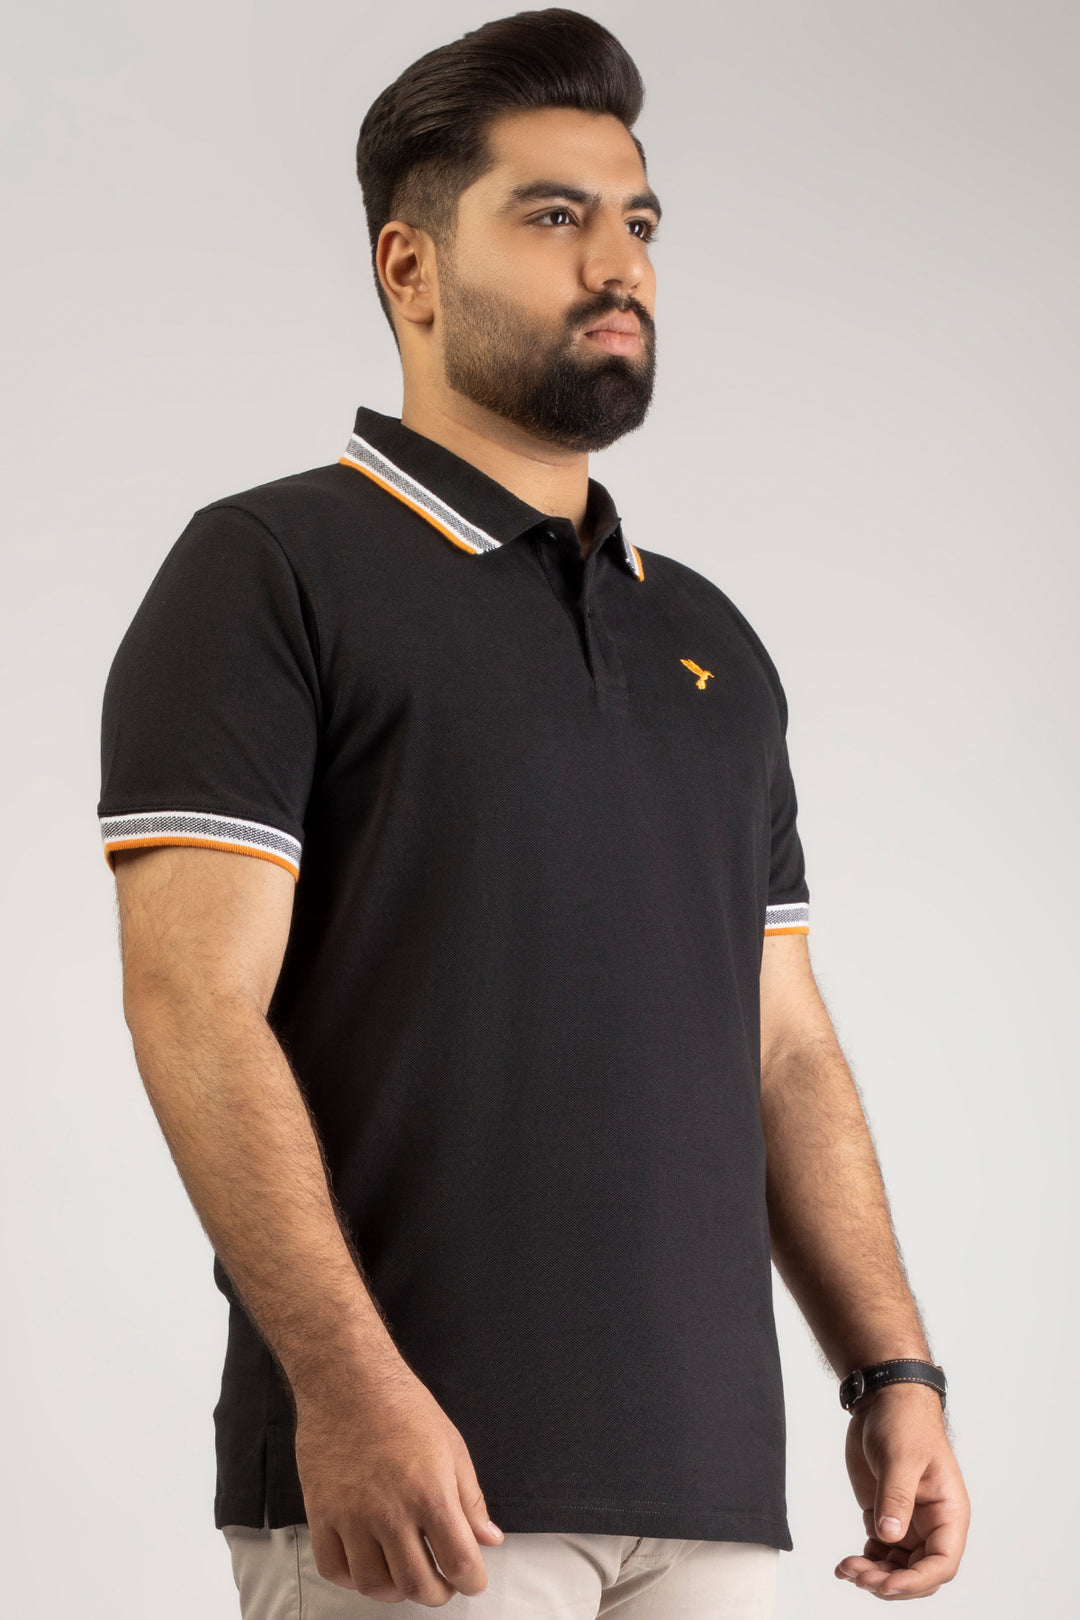 Black Jacquard Collar Polo Shirt (Plus size) - A24 - MP0258P